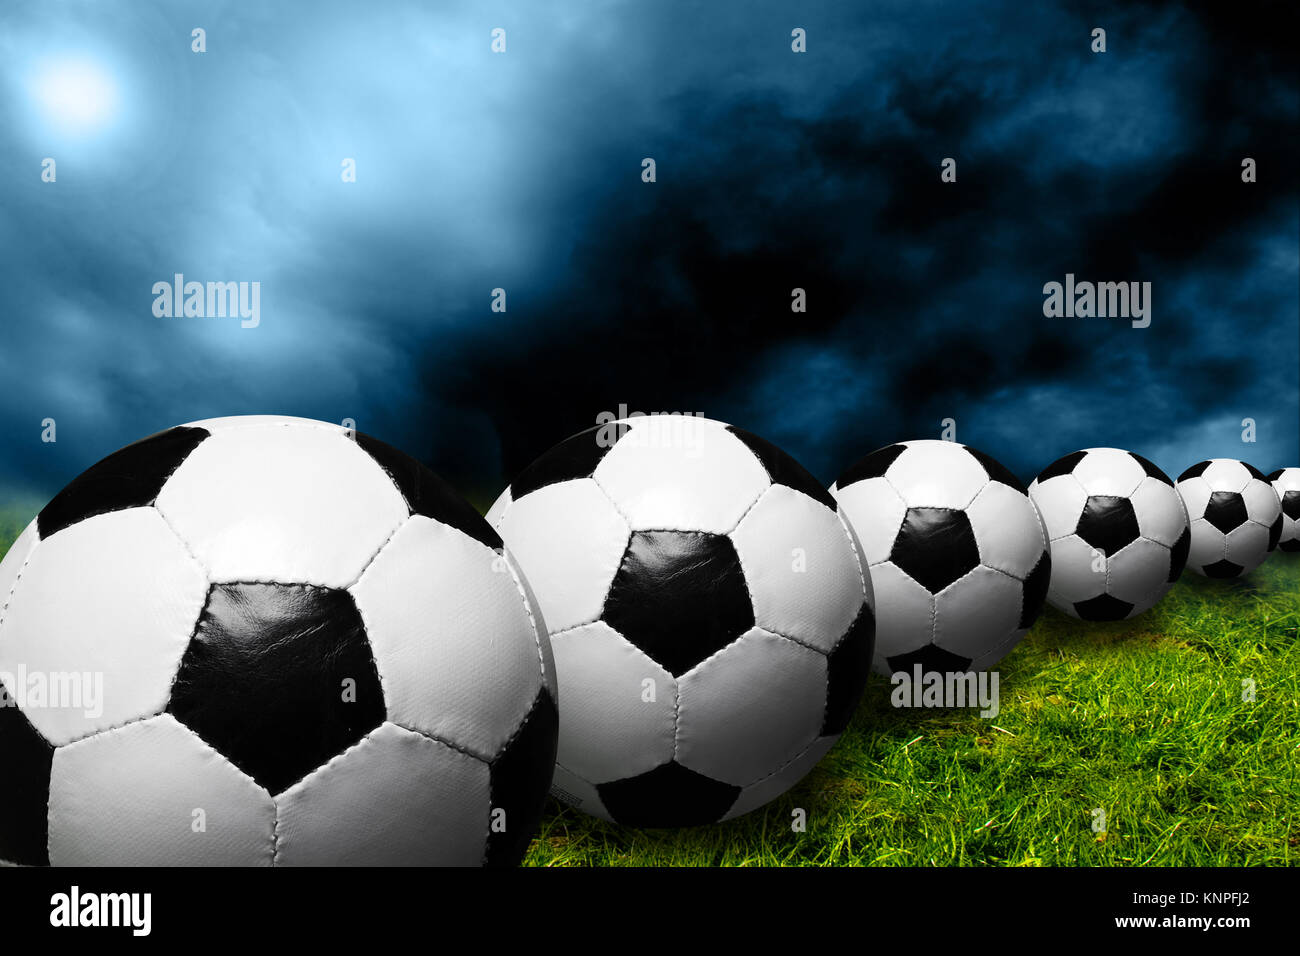 Rangée de ballons de soccer avec ciel dramatique Banque D'Images